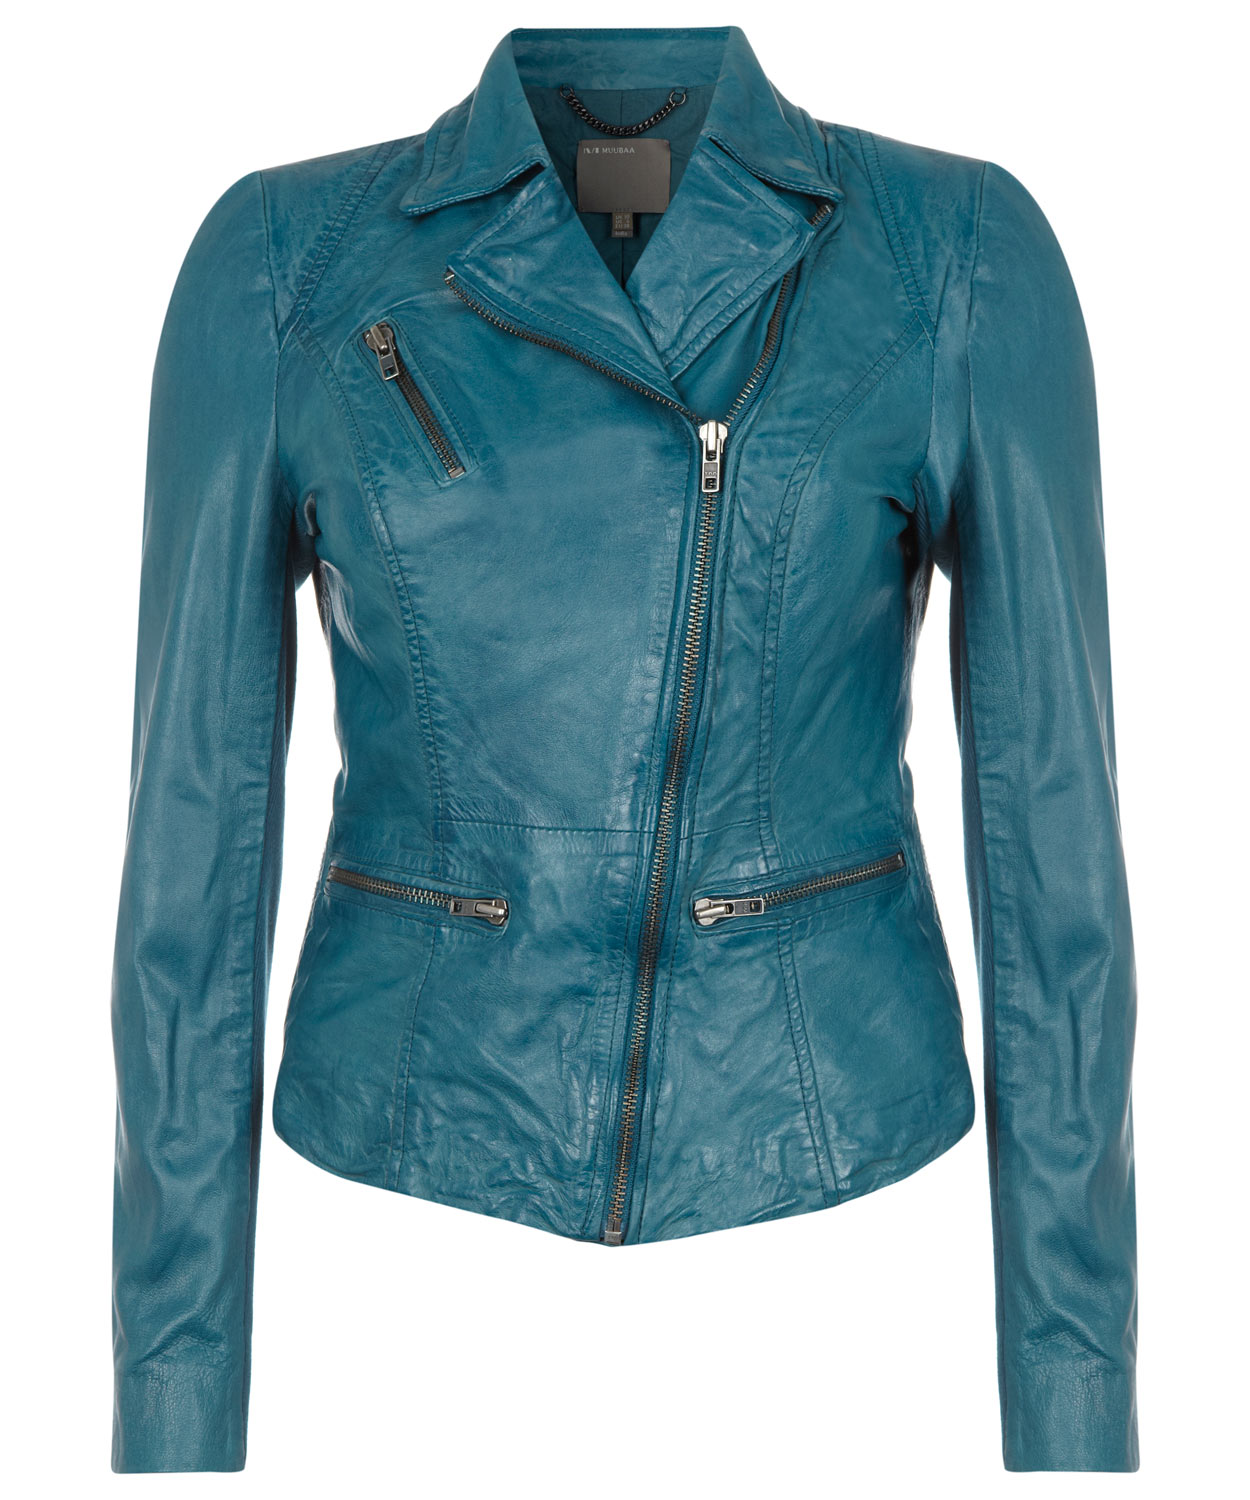 Lyst - Muubaa Teal Ribbed Sleeve Leather Biker Jacket in Blue